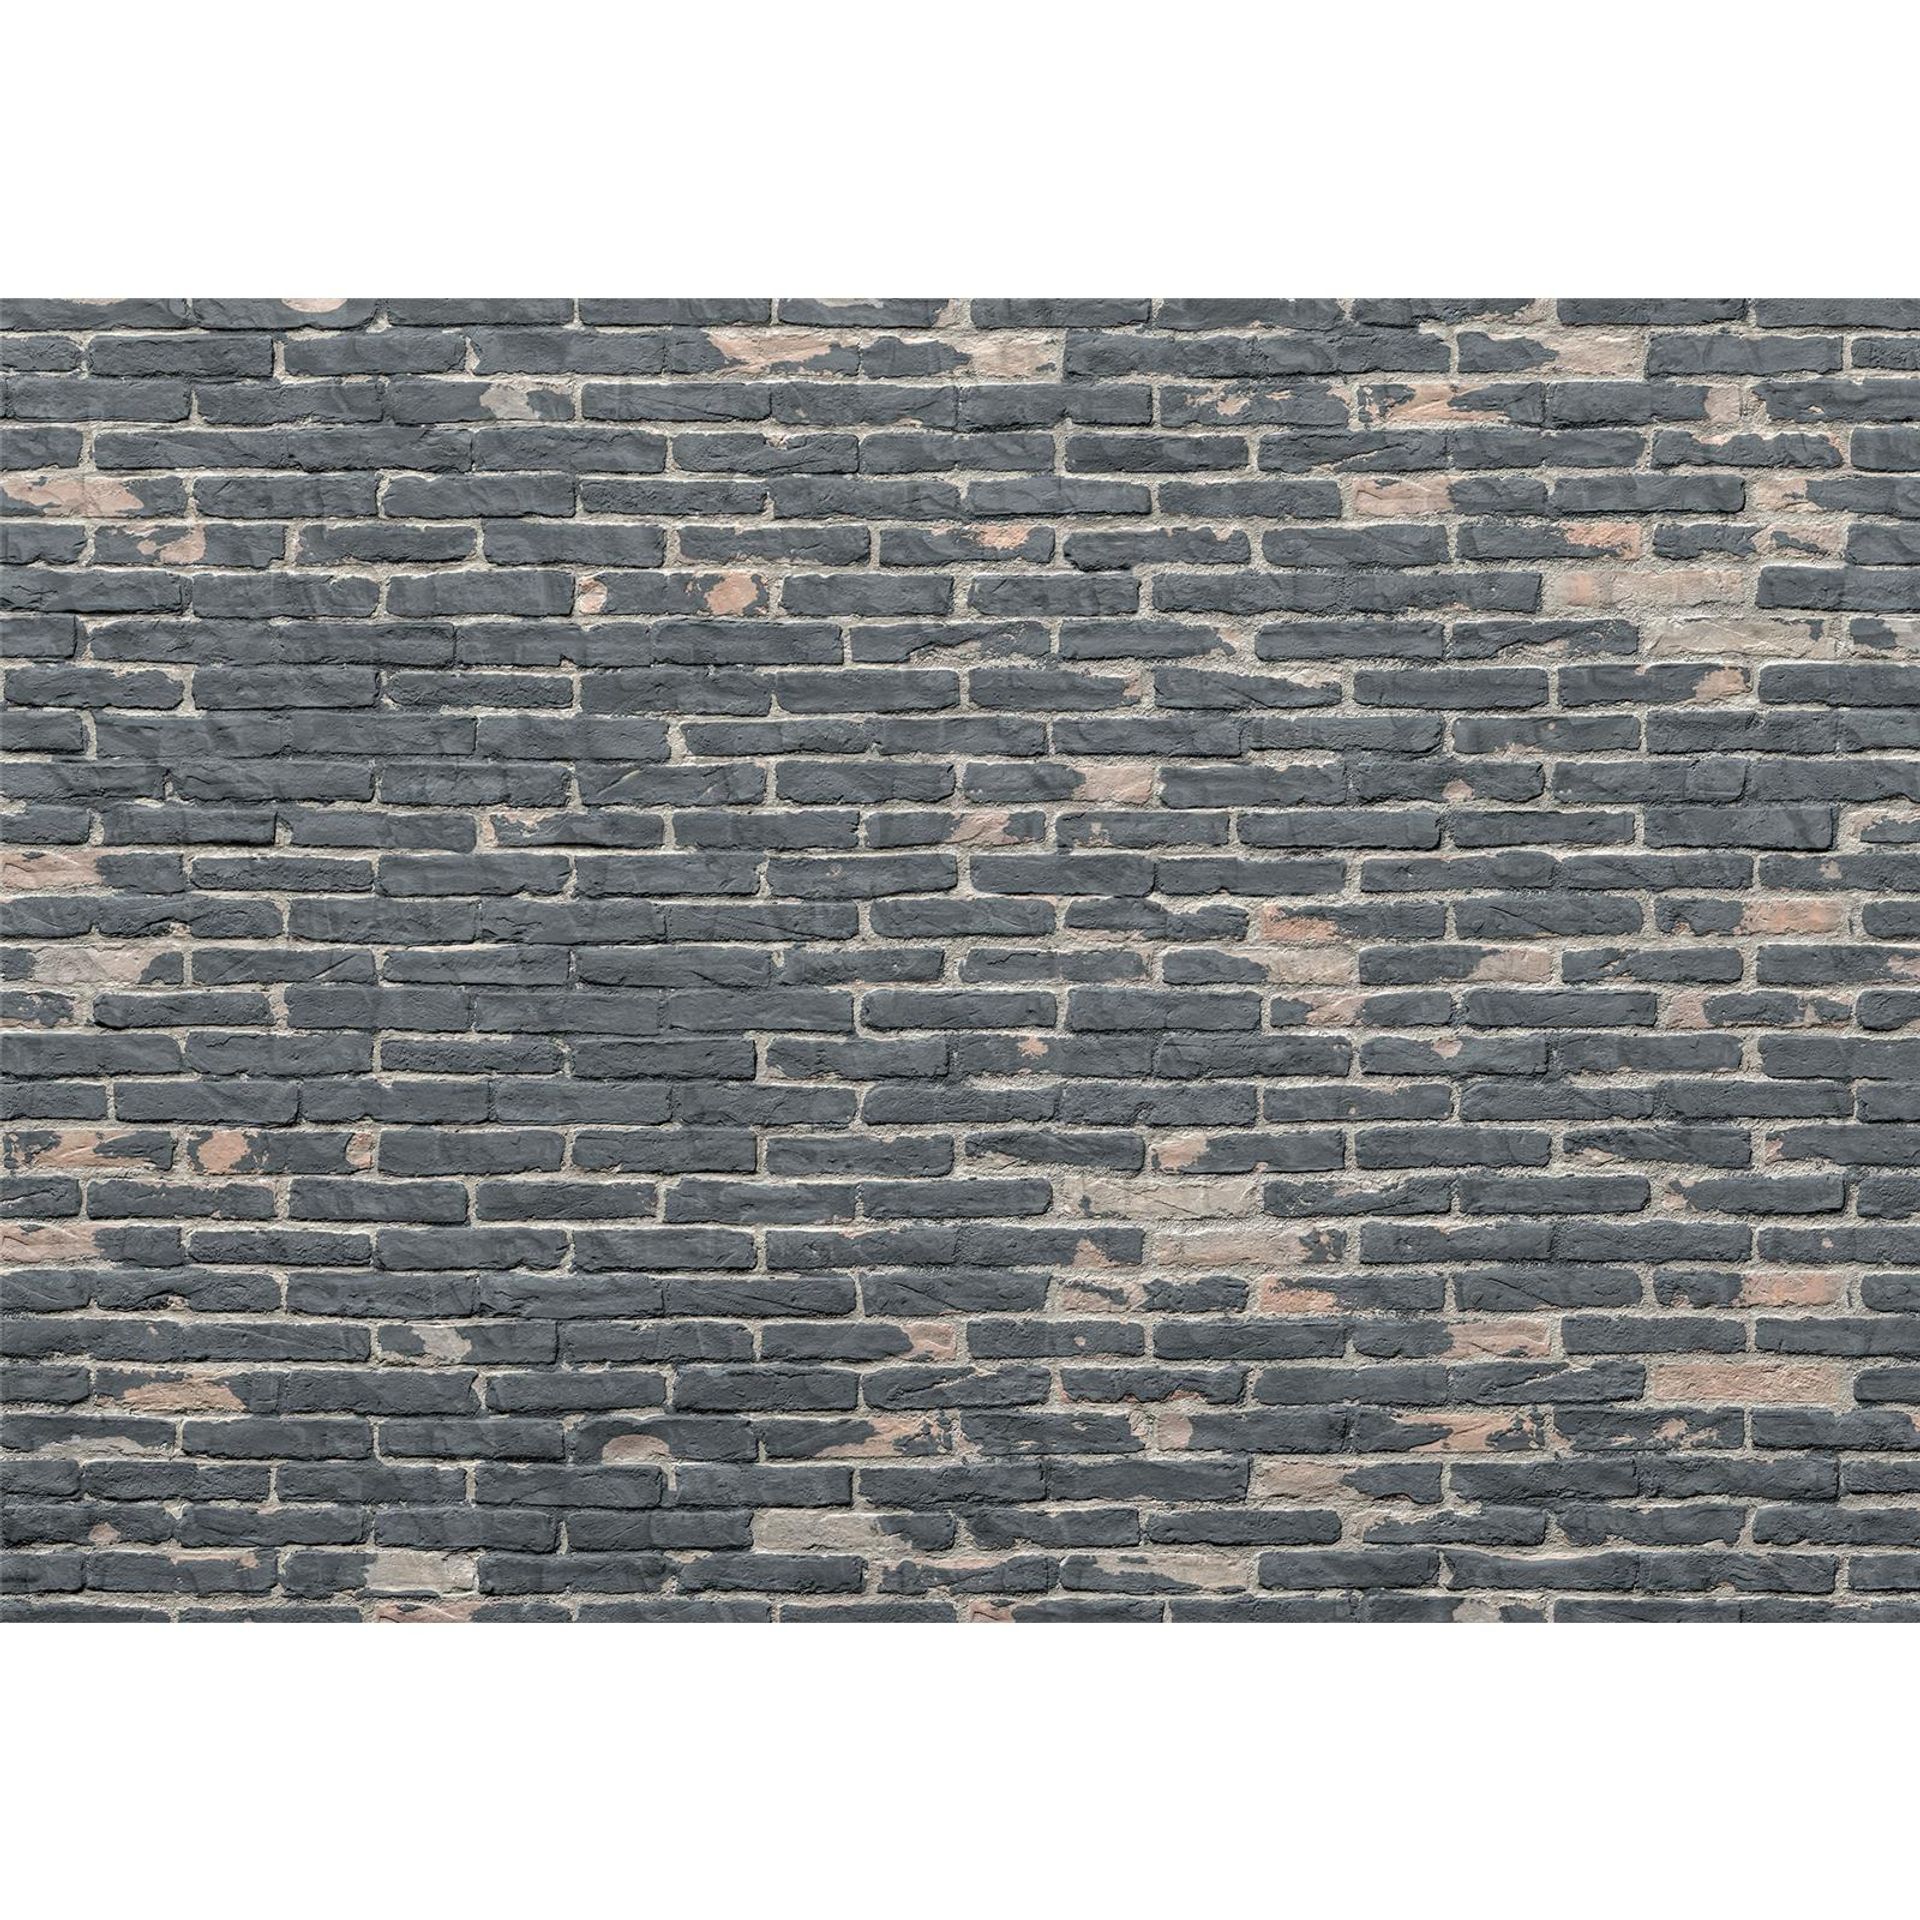 Vlies Fototapete - Painted Bricks - Größe 368 x 248 cm